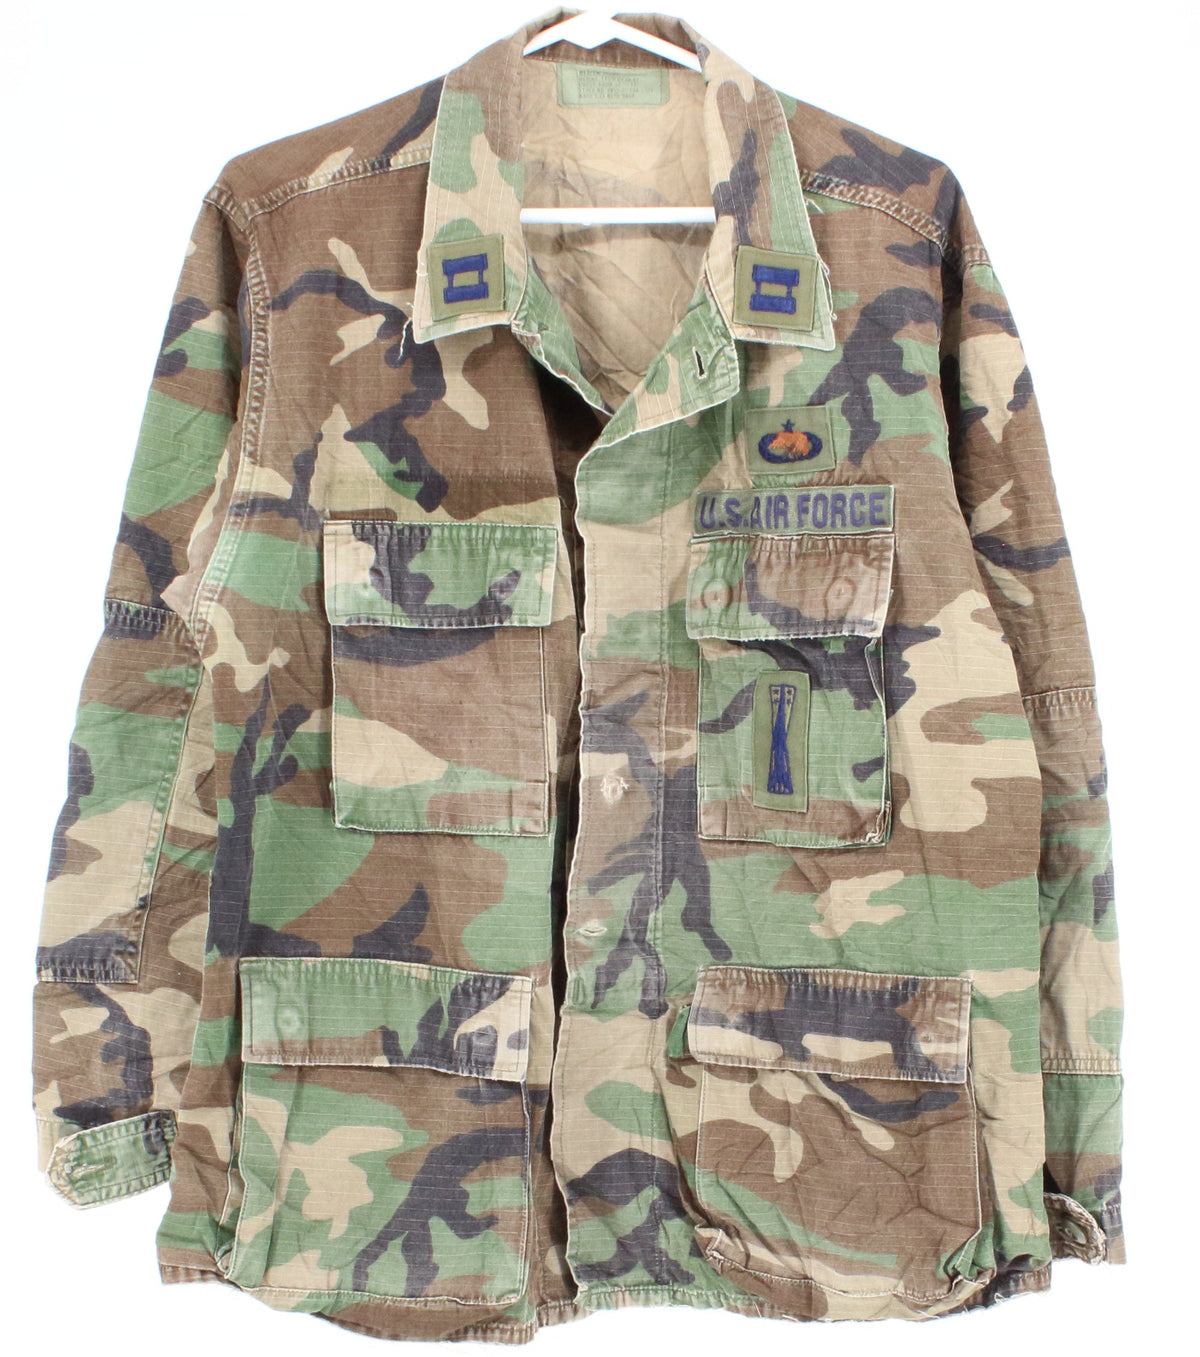 U.S Air Force Multi Pockets Camo Army Uniform Shirt